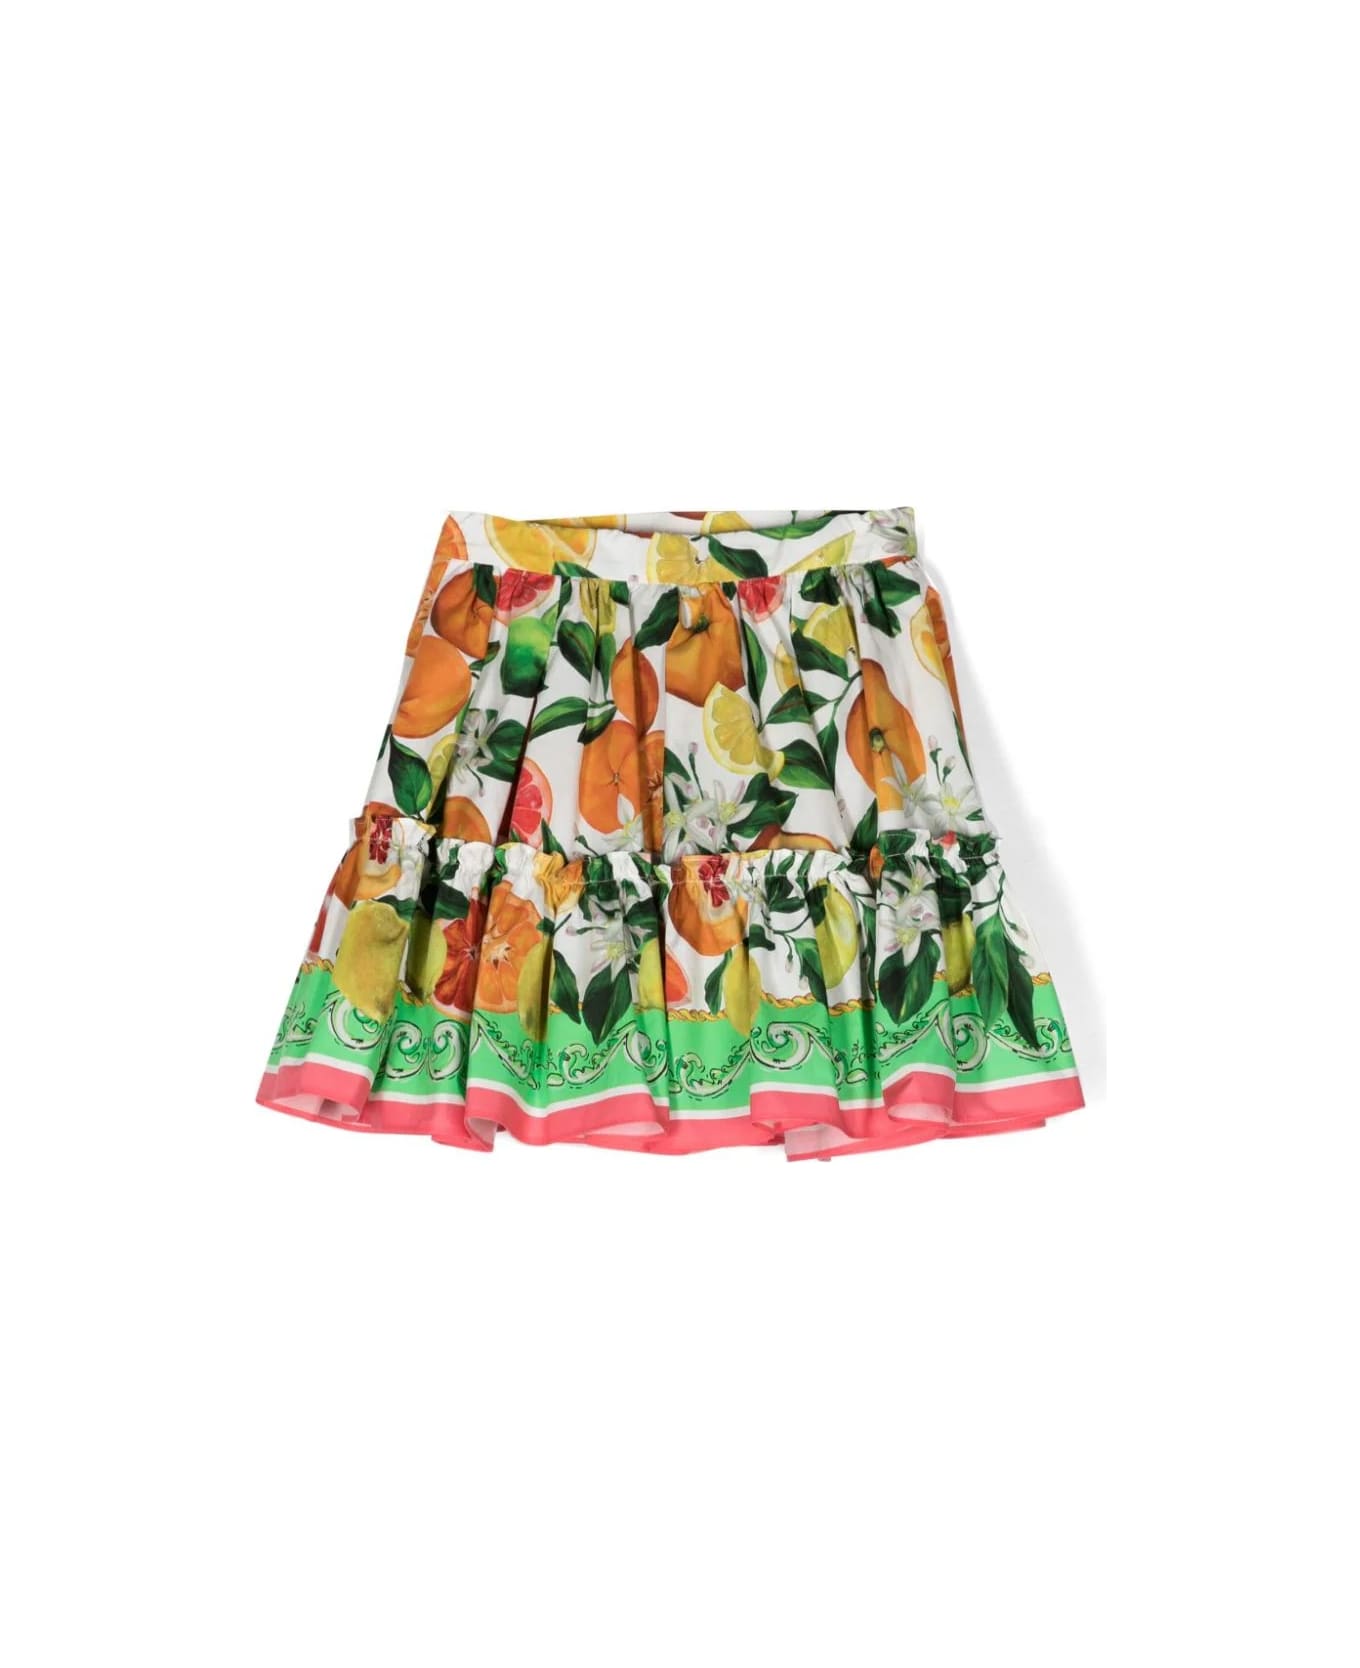 Dolce & Gabbana Miniskirt With Orange And Lemon Print - Multicolour